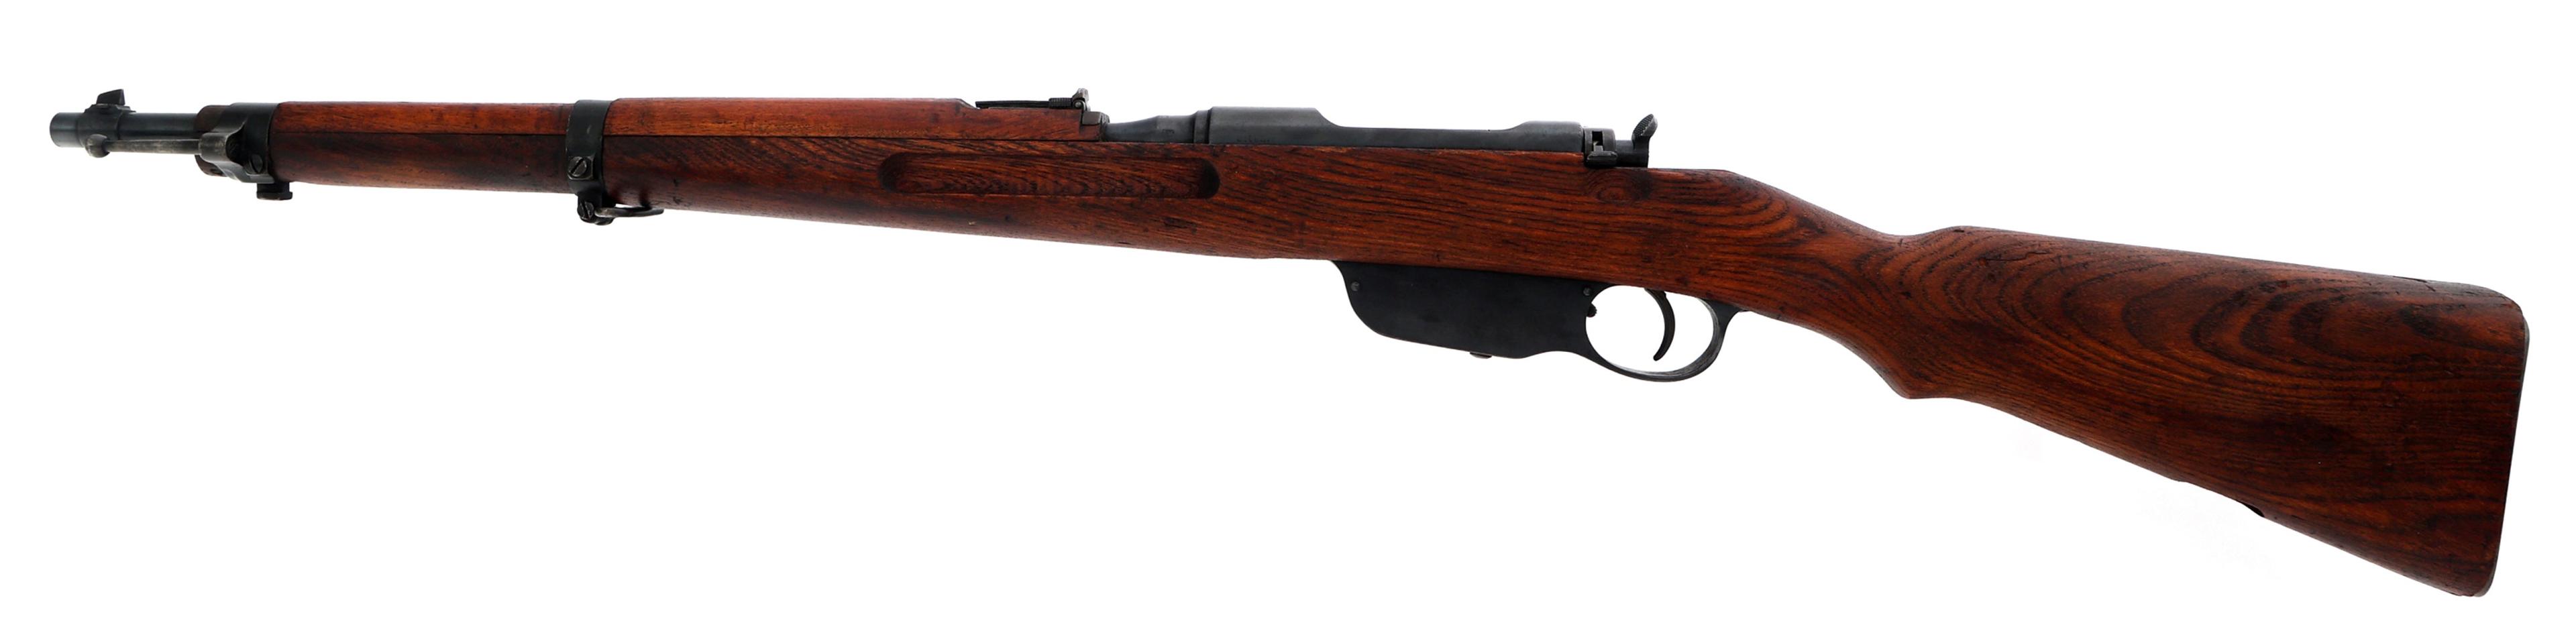 YUGOSLAVIAN STEYR MODEL M95/24 7.92mm CAL CARBINE